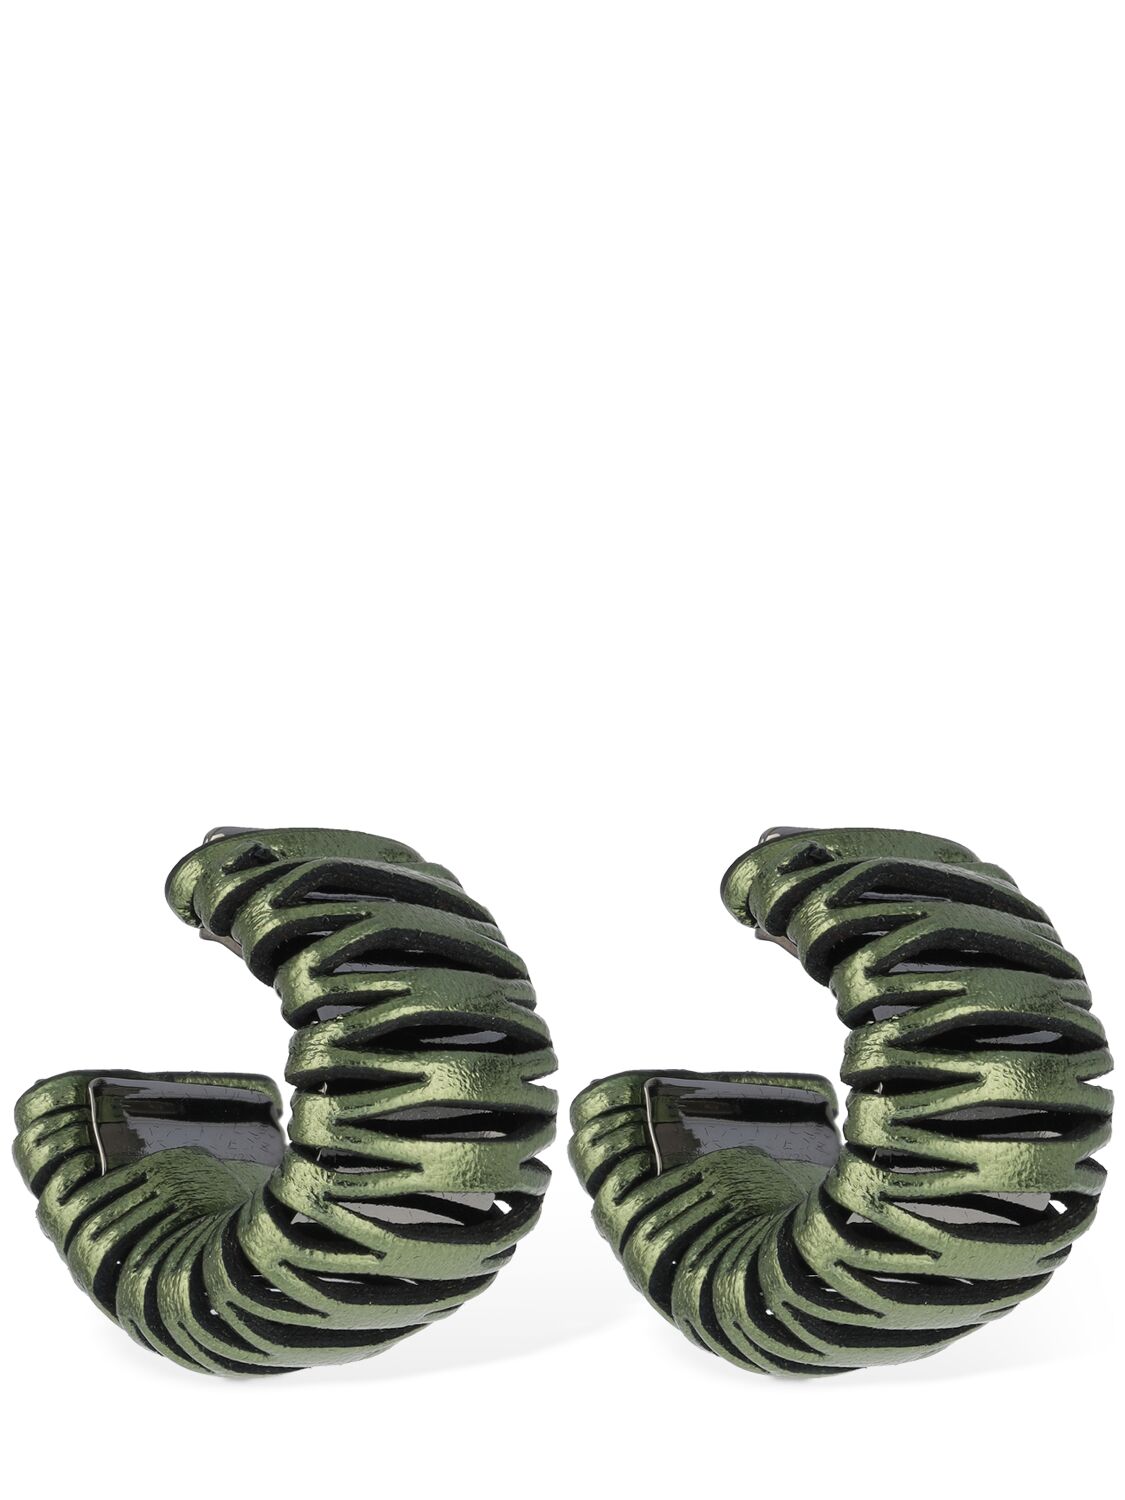 Image of Caterpillar Leather Hoop Earrings